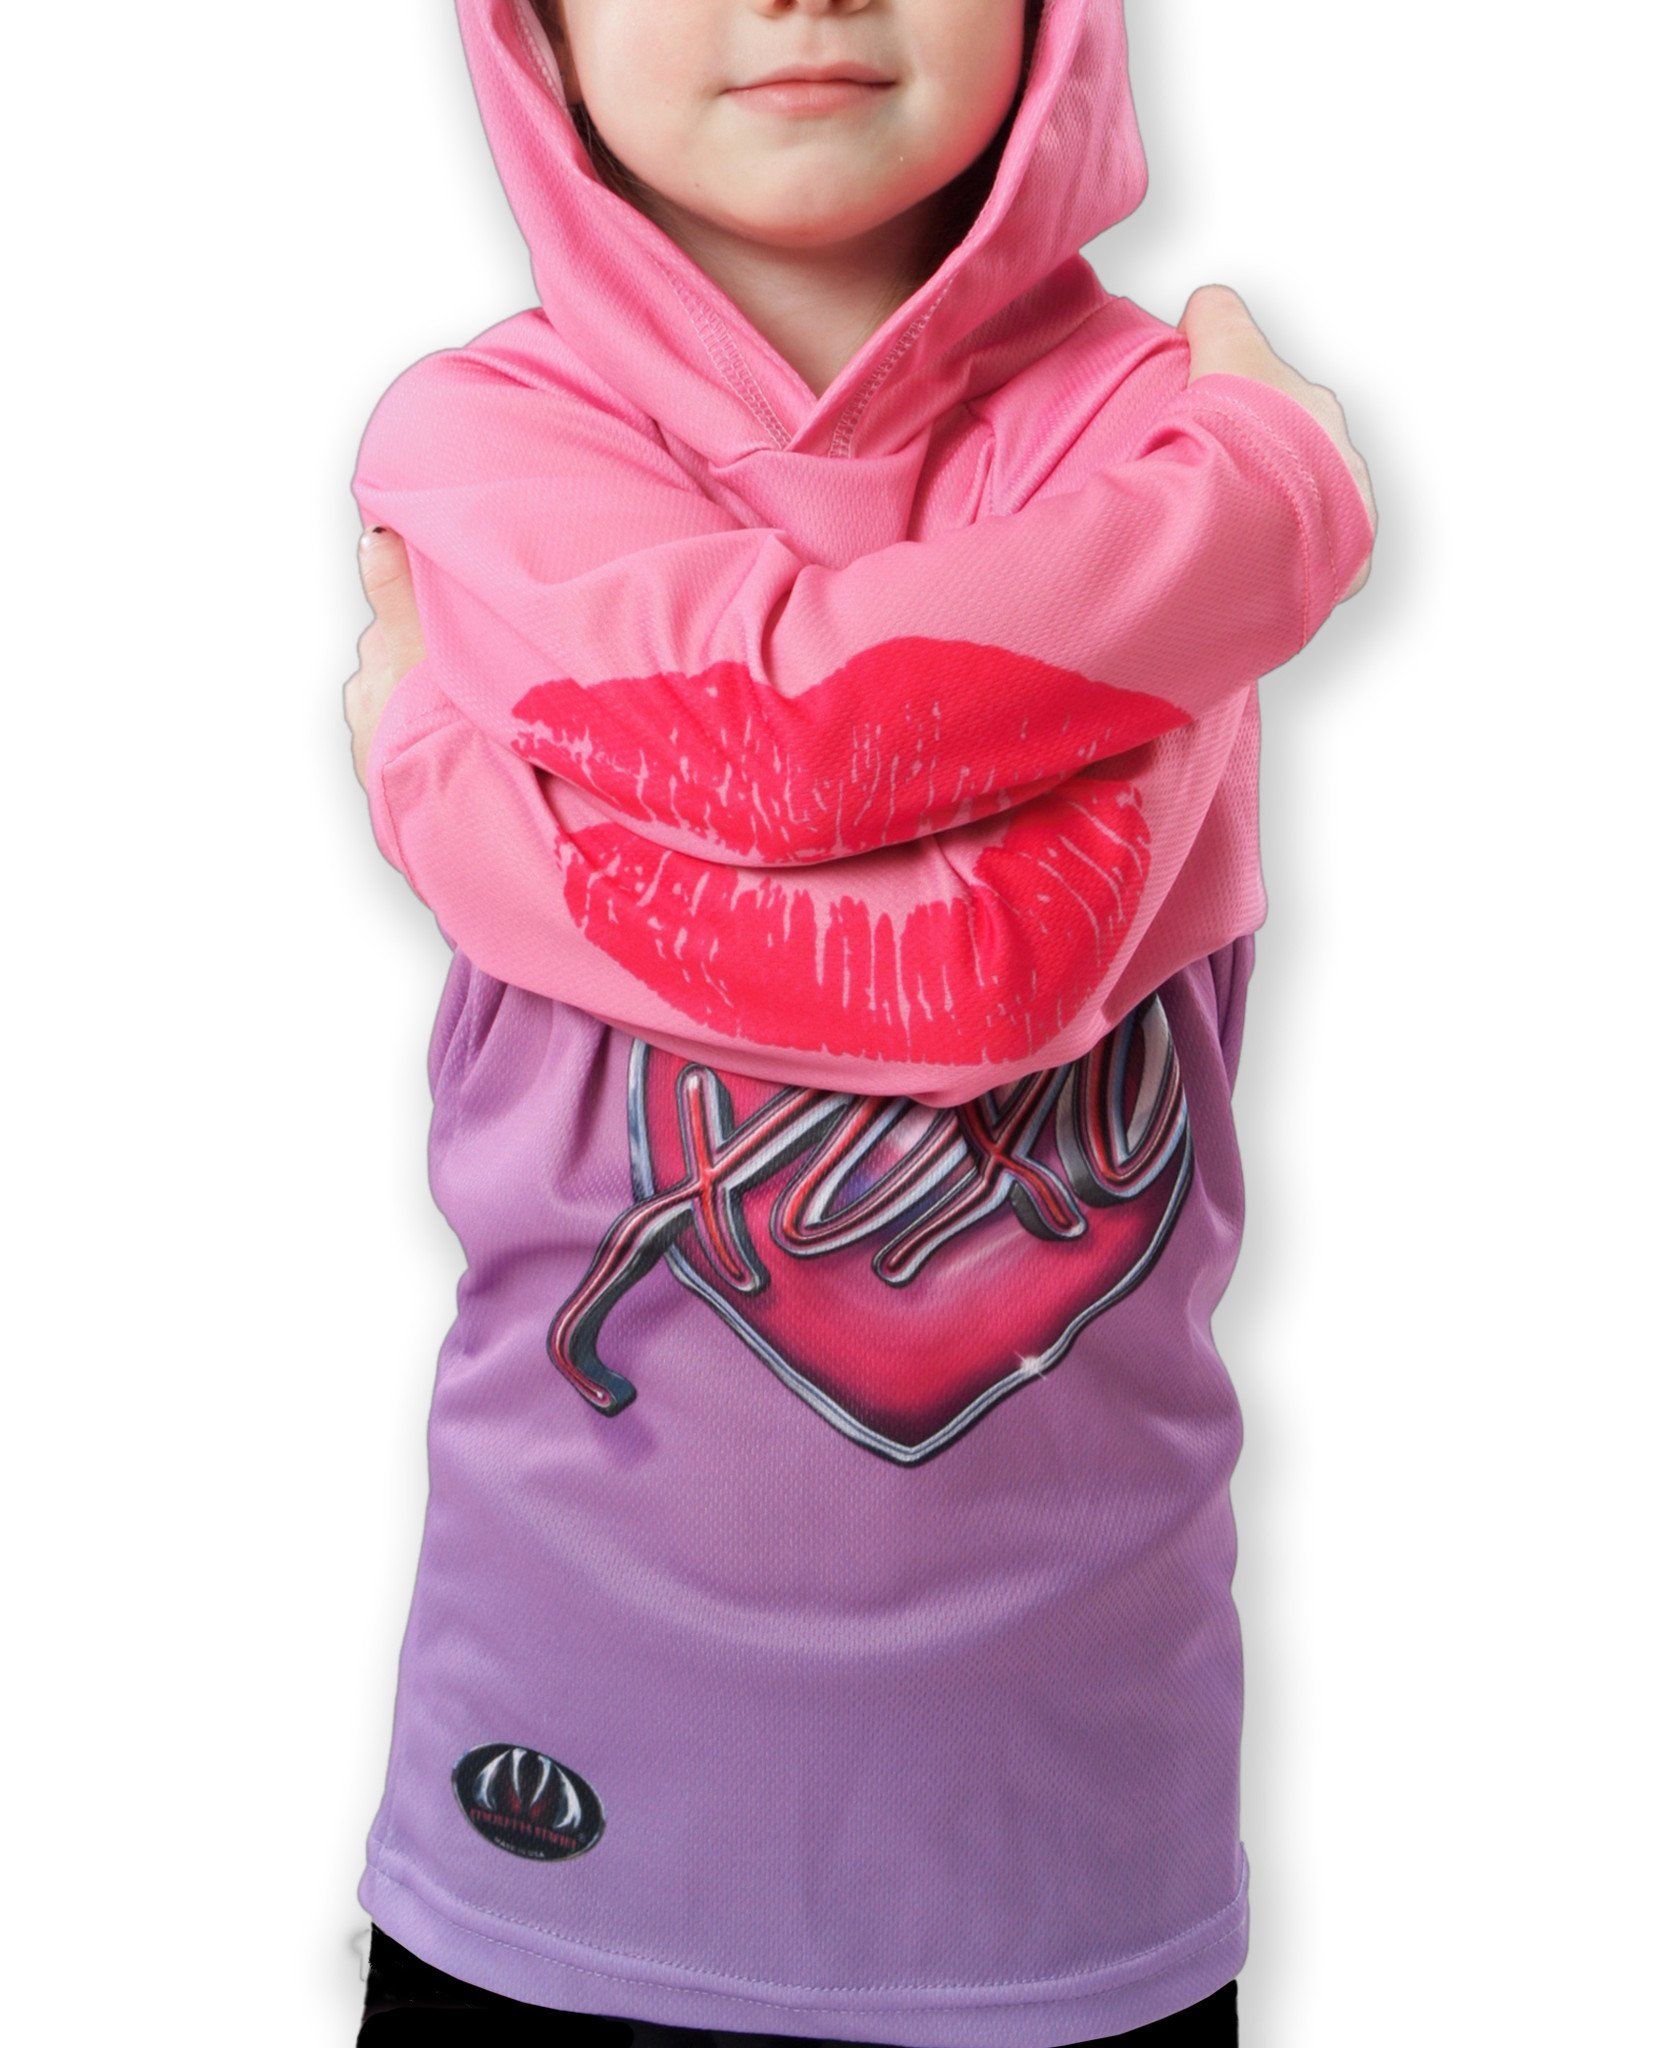 XOXO KISSY LIPS Hoodie Chomp Shirt by MOUTHMAN® Kid's Clothing 